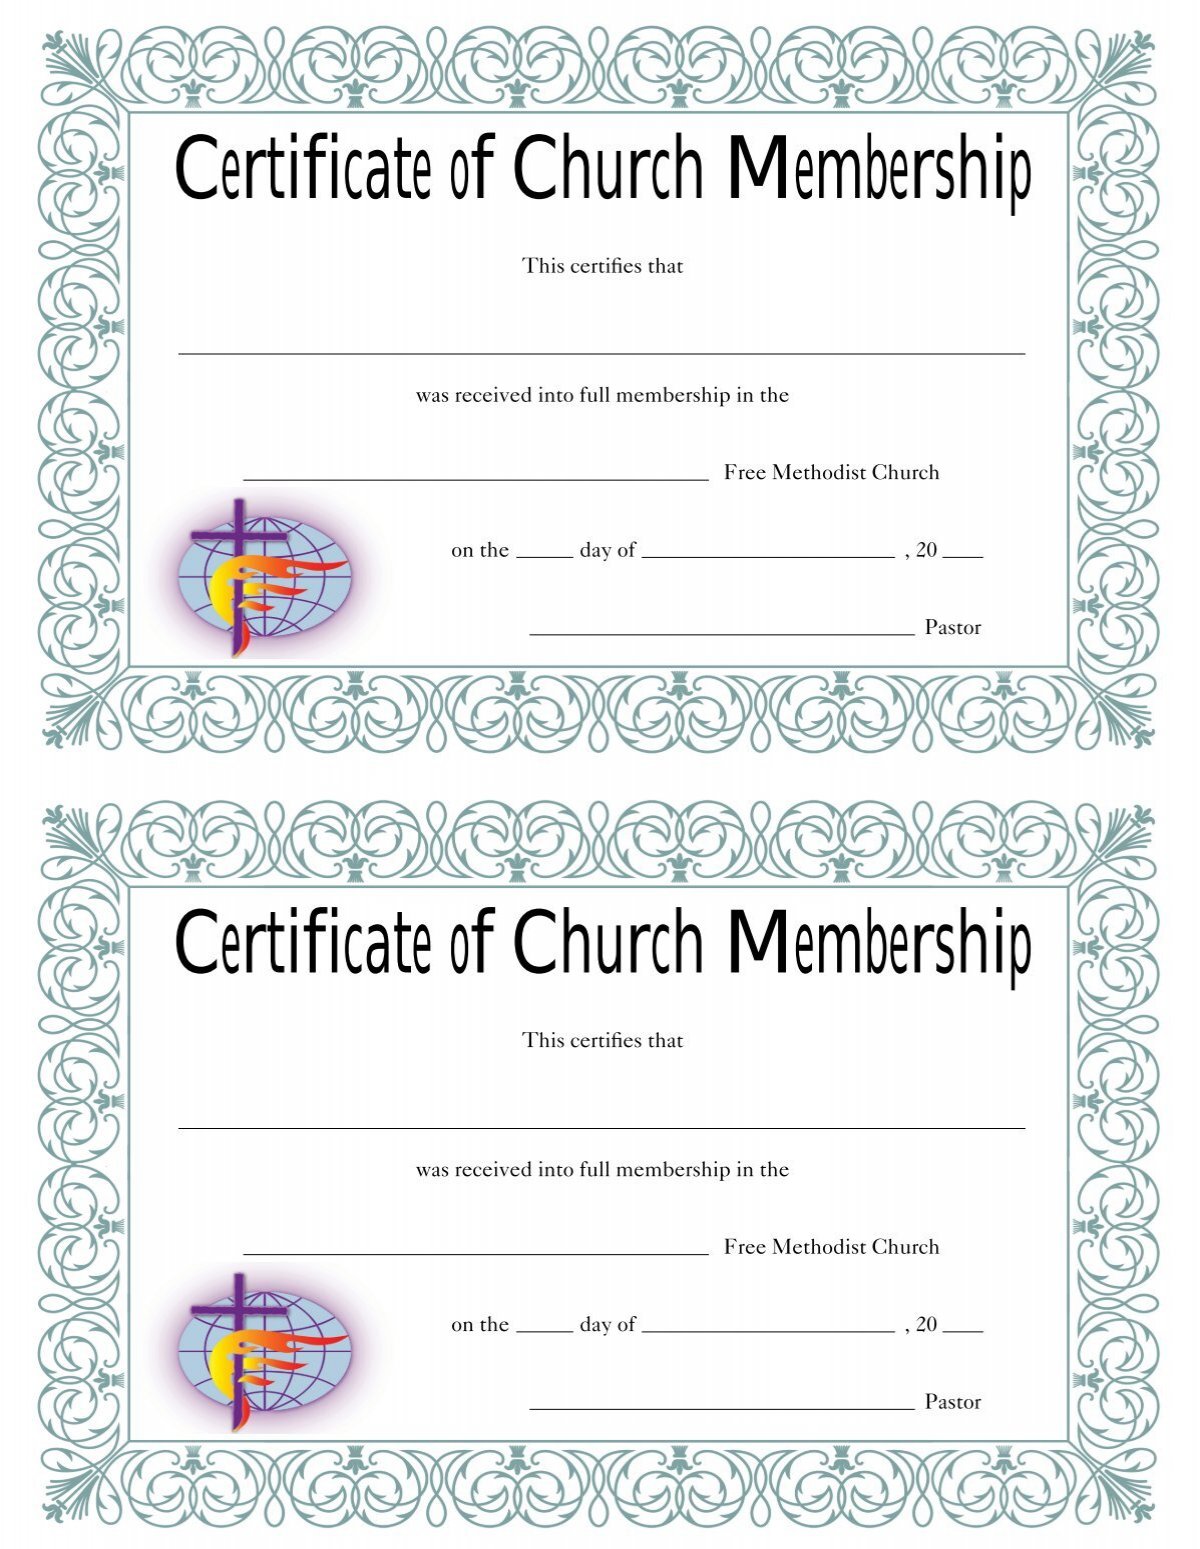 certificate-of-church-membership-certificate-of-church-membership